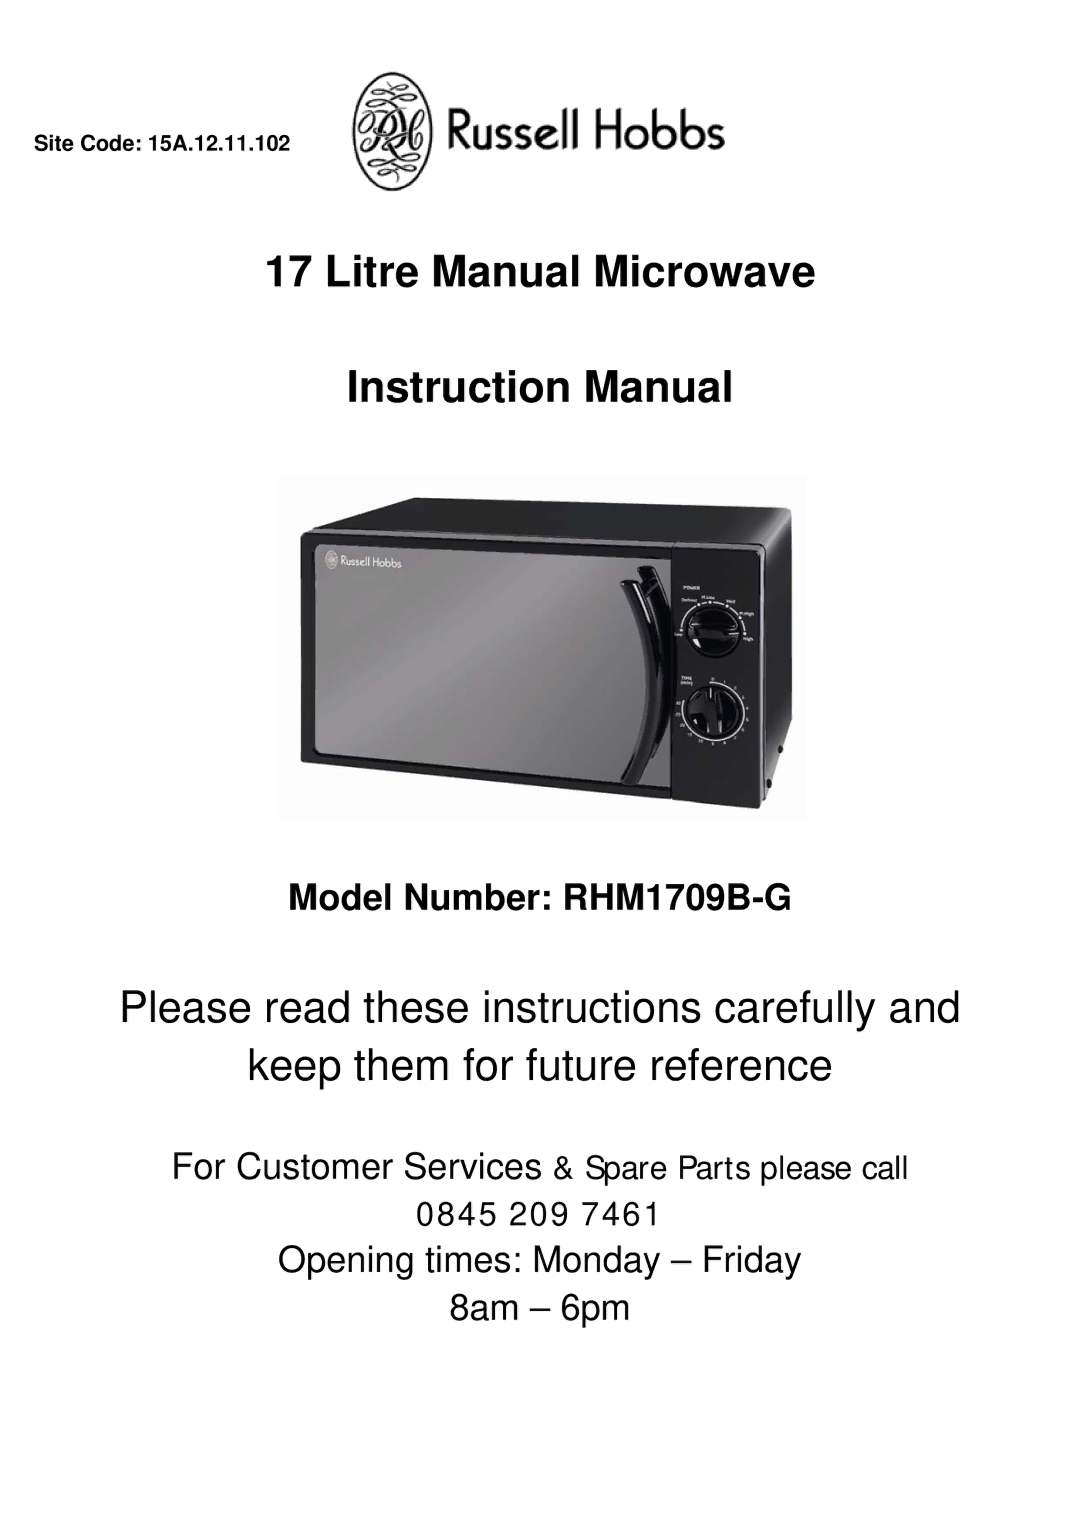 Russell Hobbs RHM1709B-G instruction manual Litre Manual Microwave 